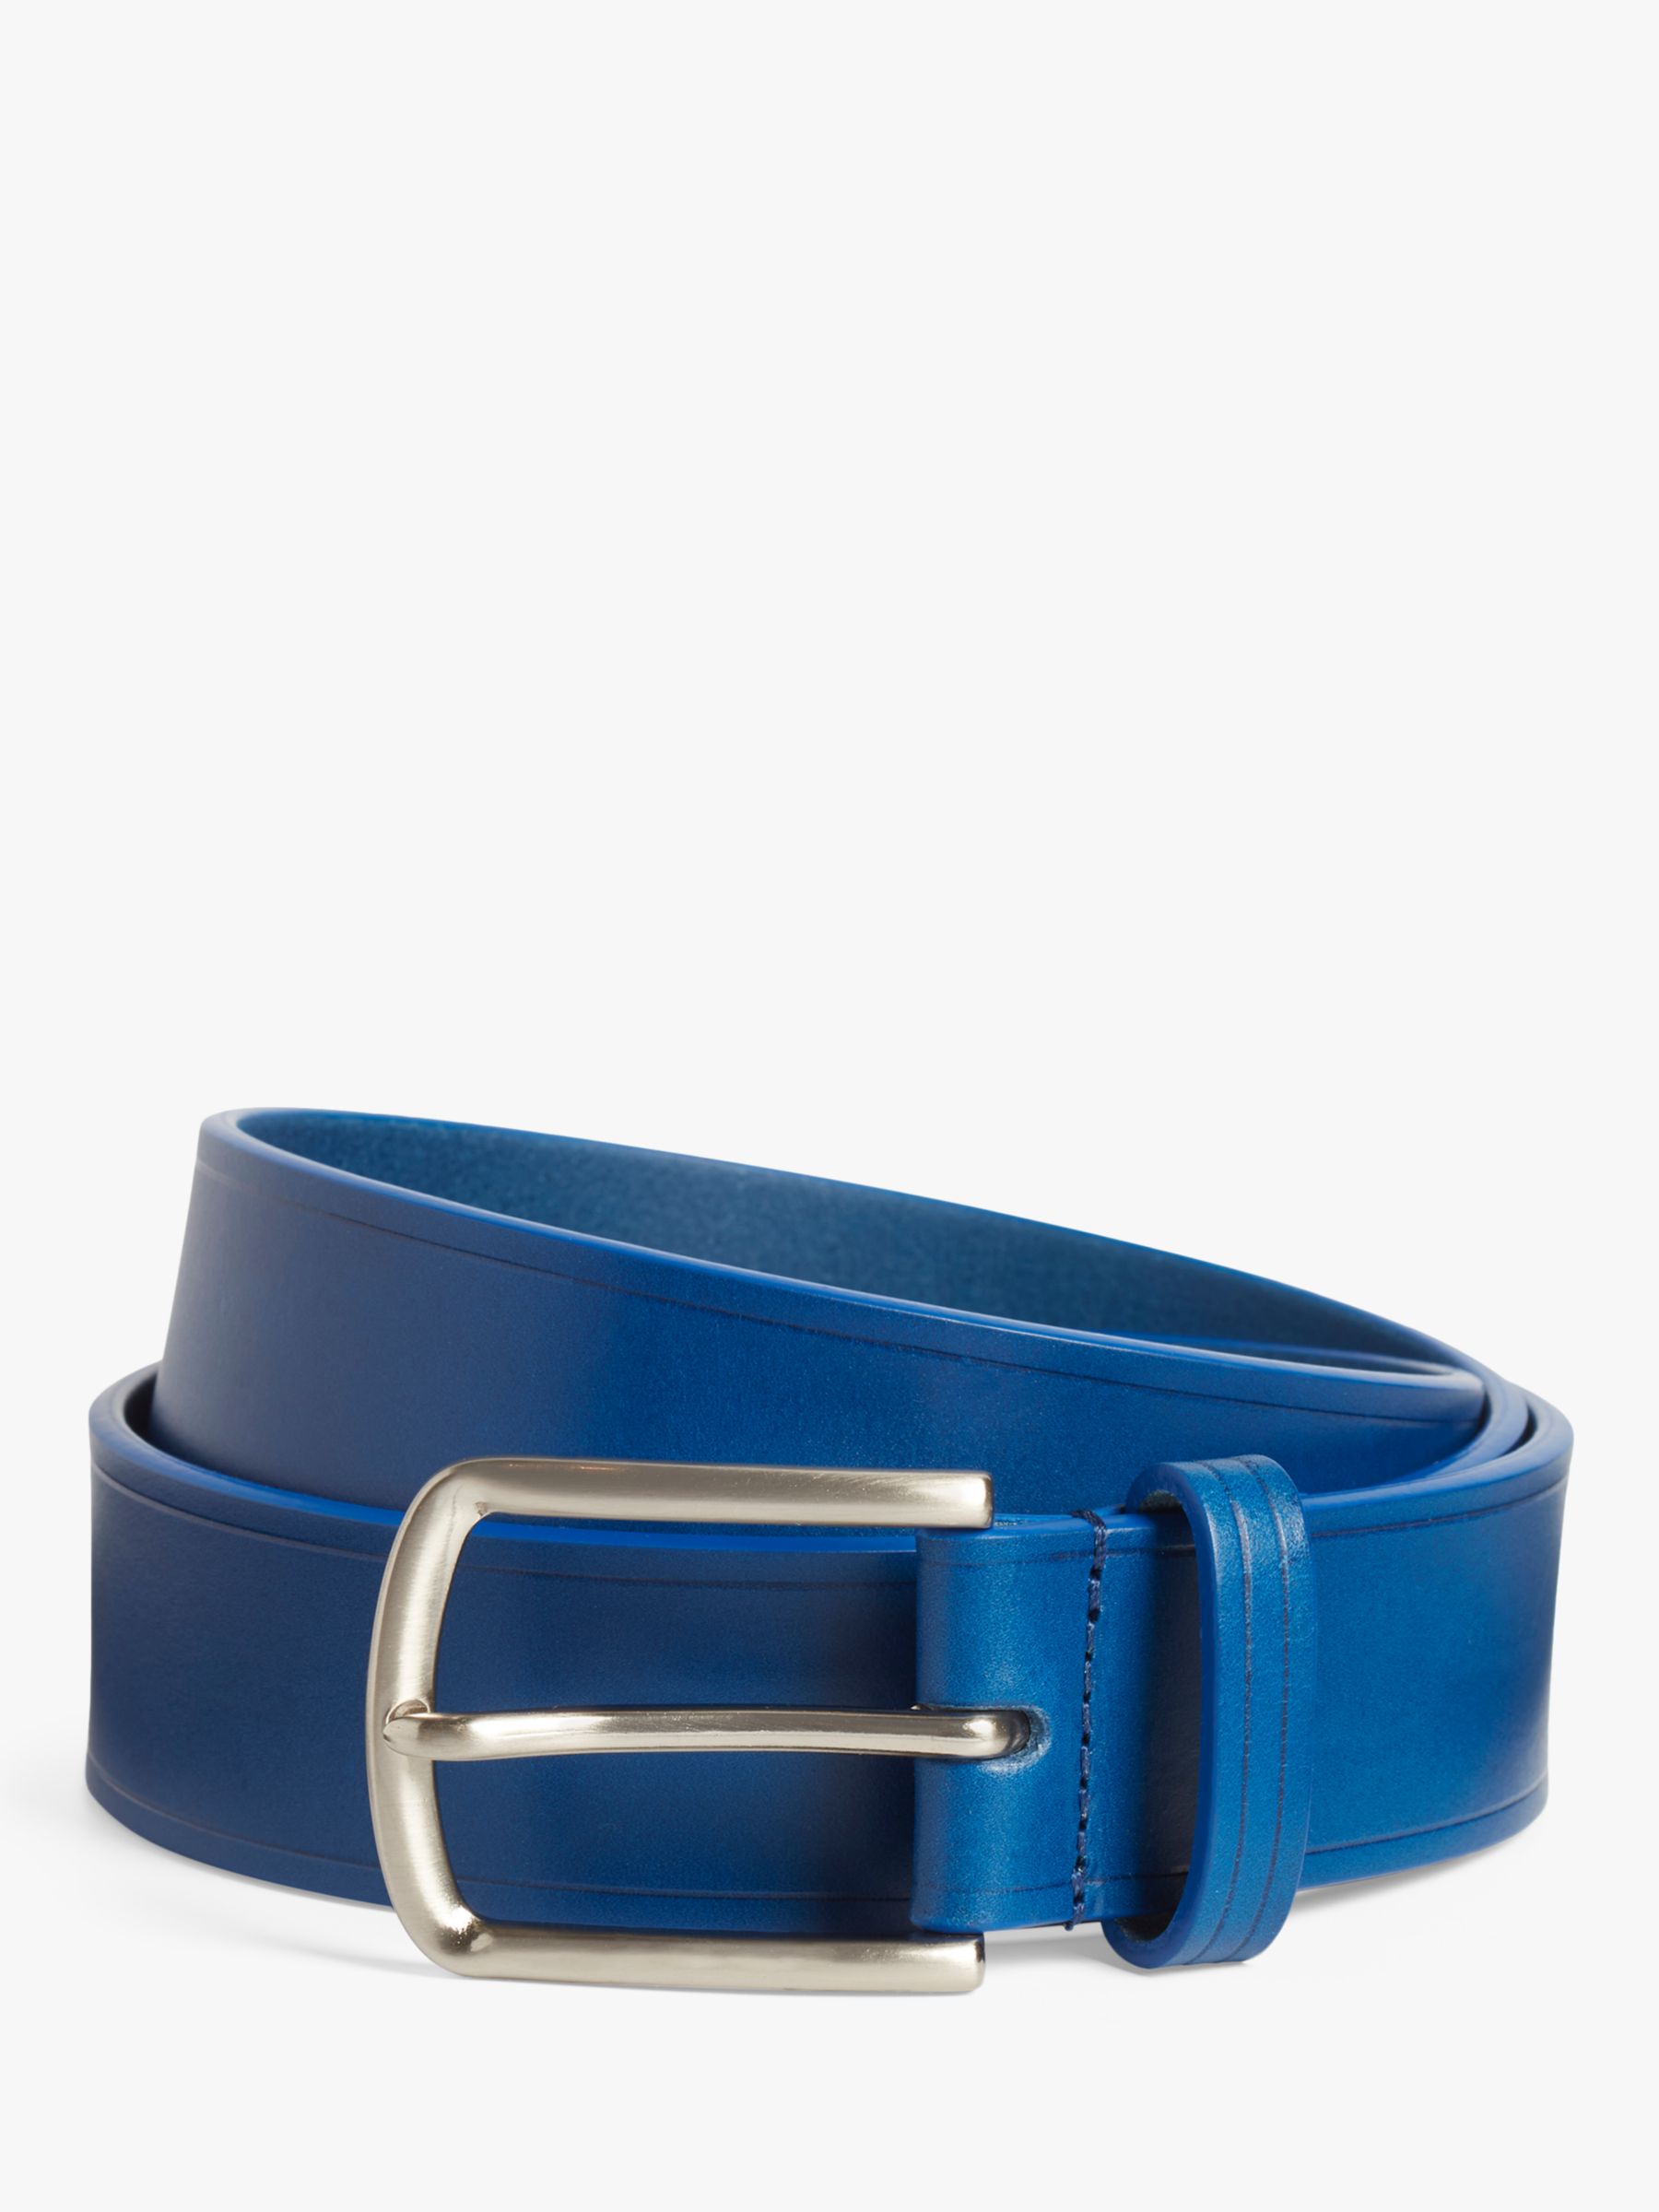 Simon Carter Leather Belt, Blue at John Lewis & Partners